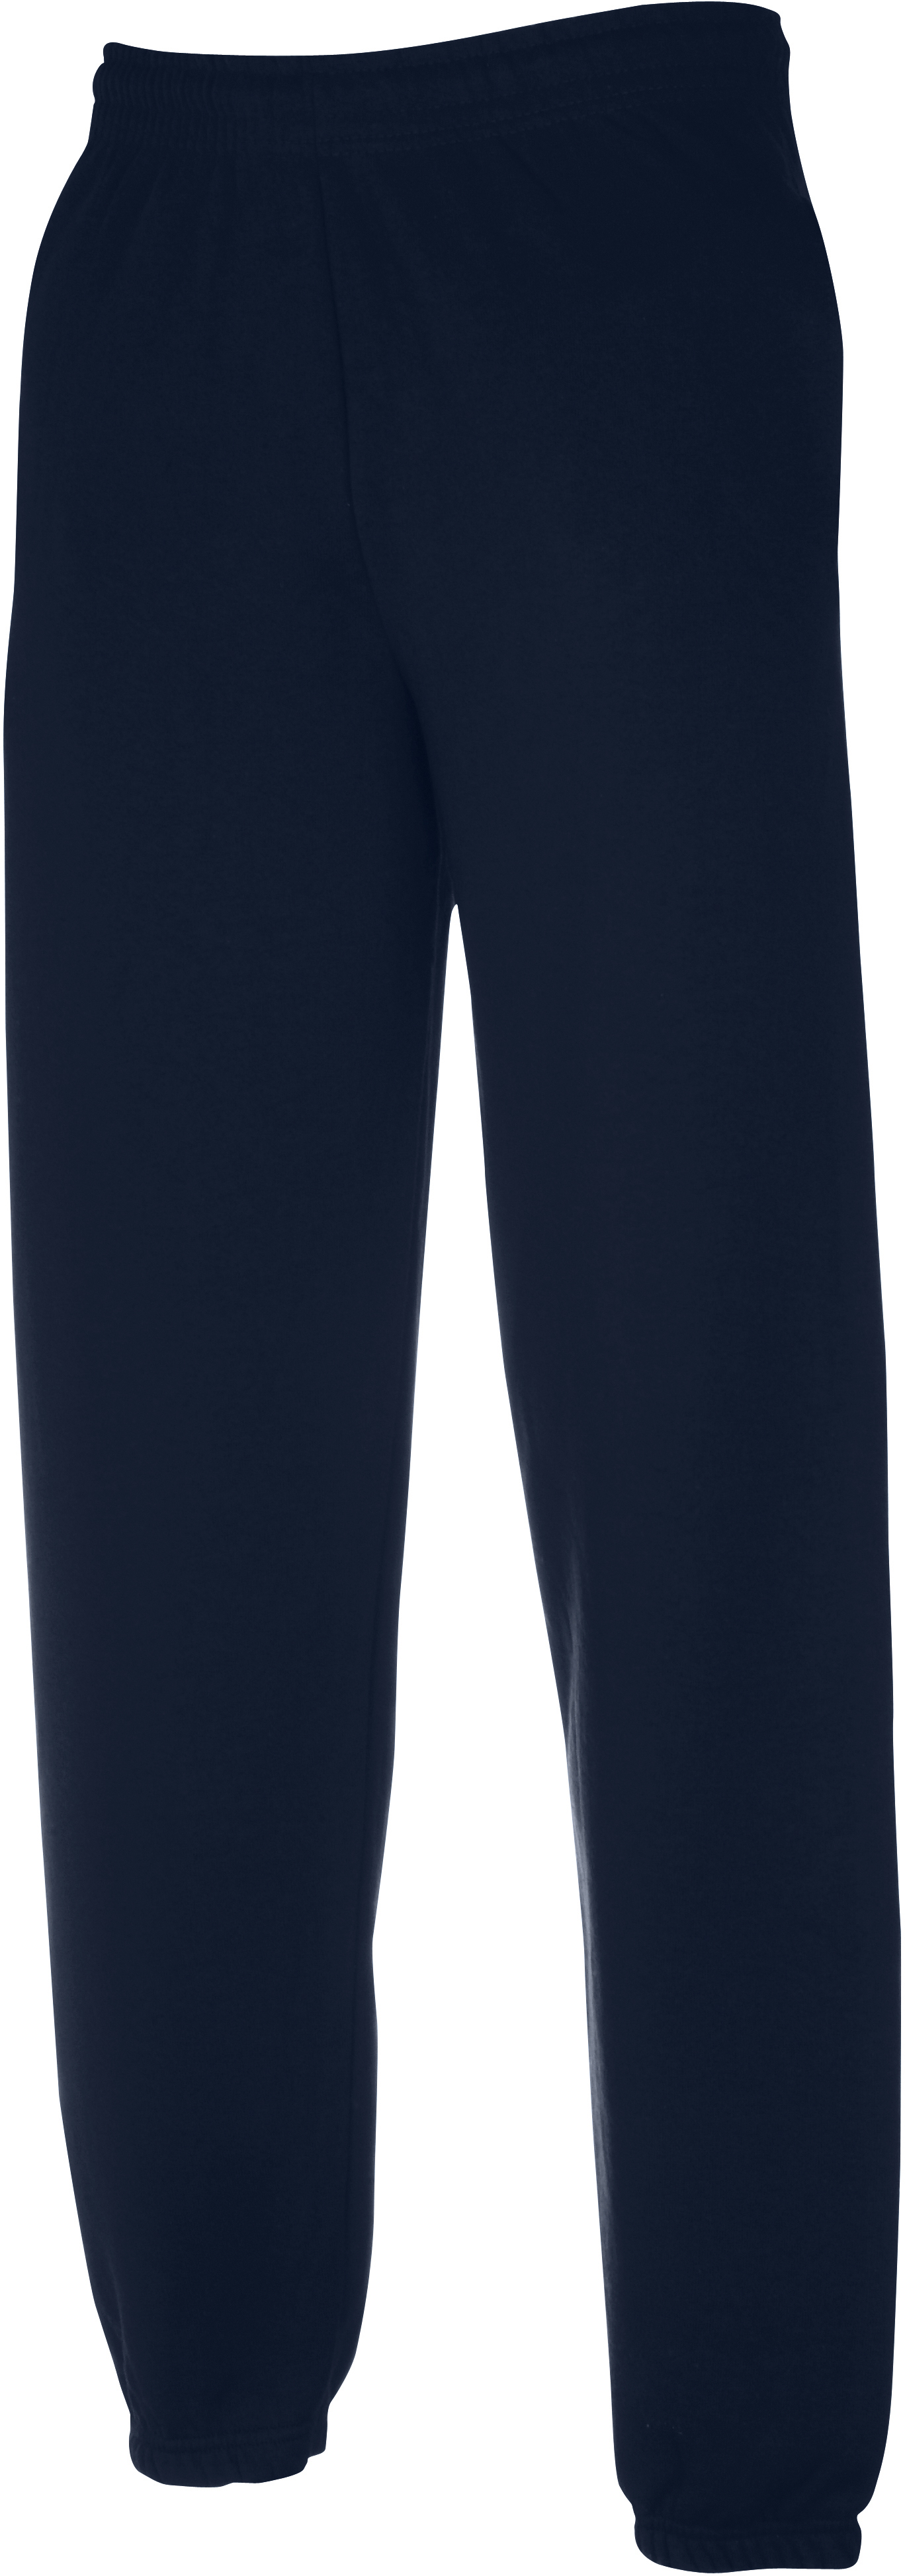 Pánské tepláky Classic Elasticated Cuff Jog Pants 64026 Barva: dark navy, Velikost: M